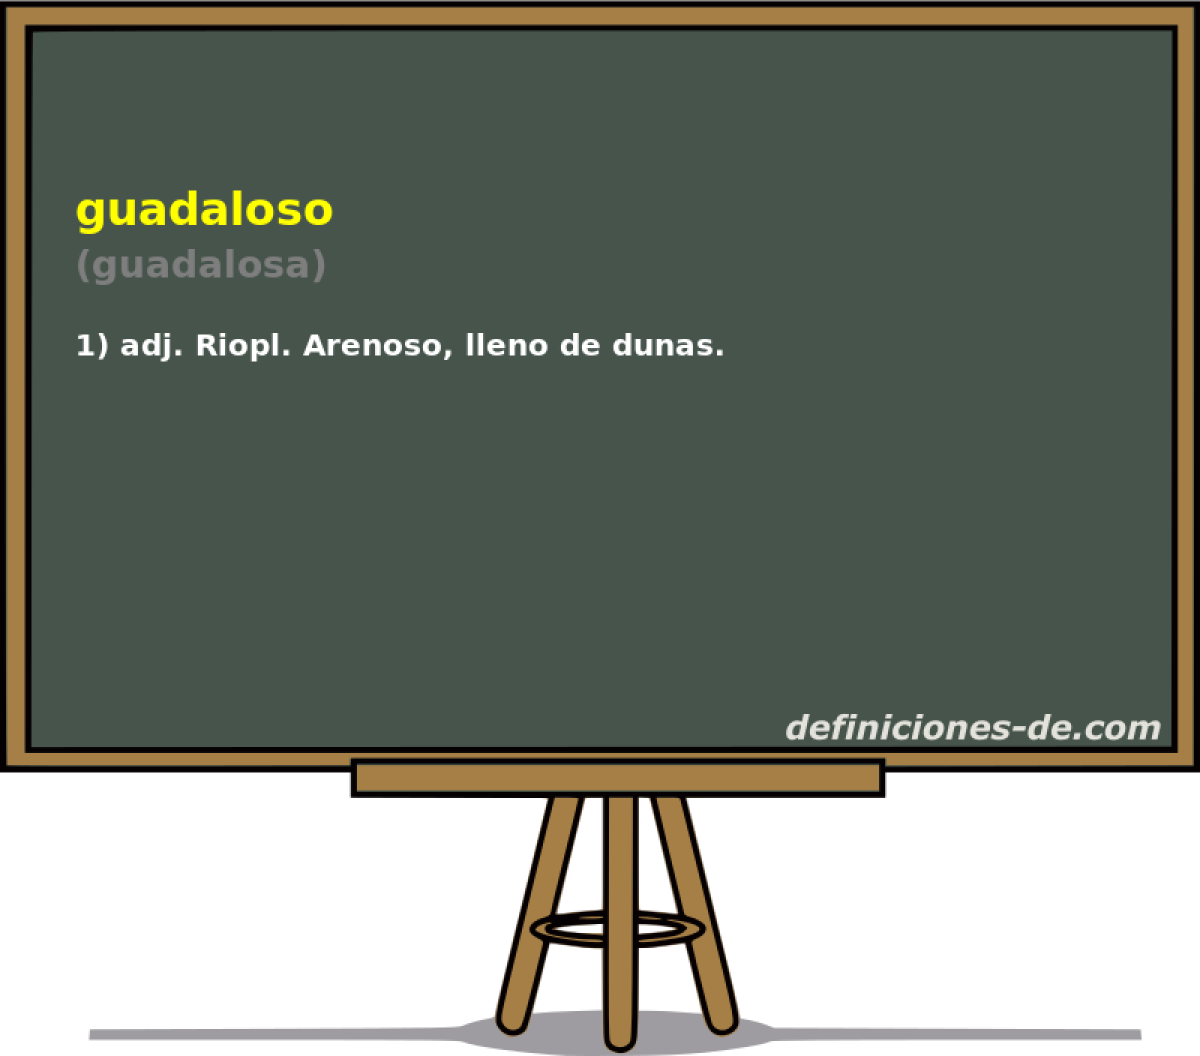 guadaloso (guadalosa)